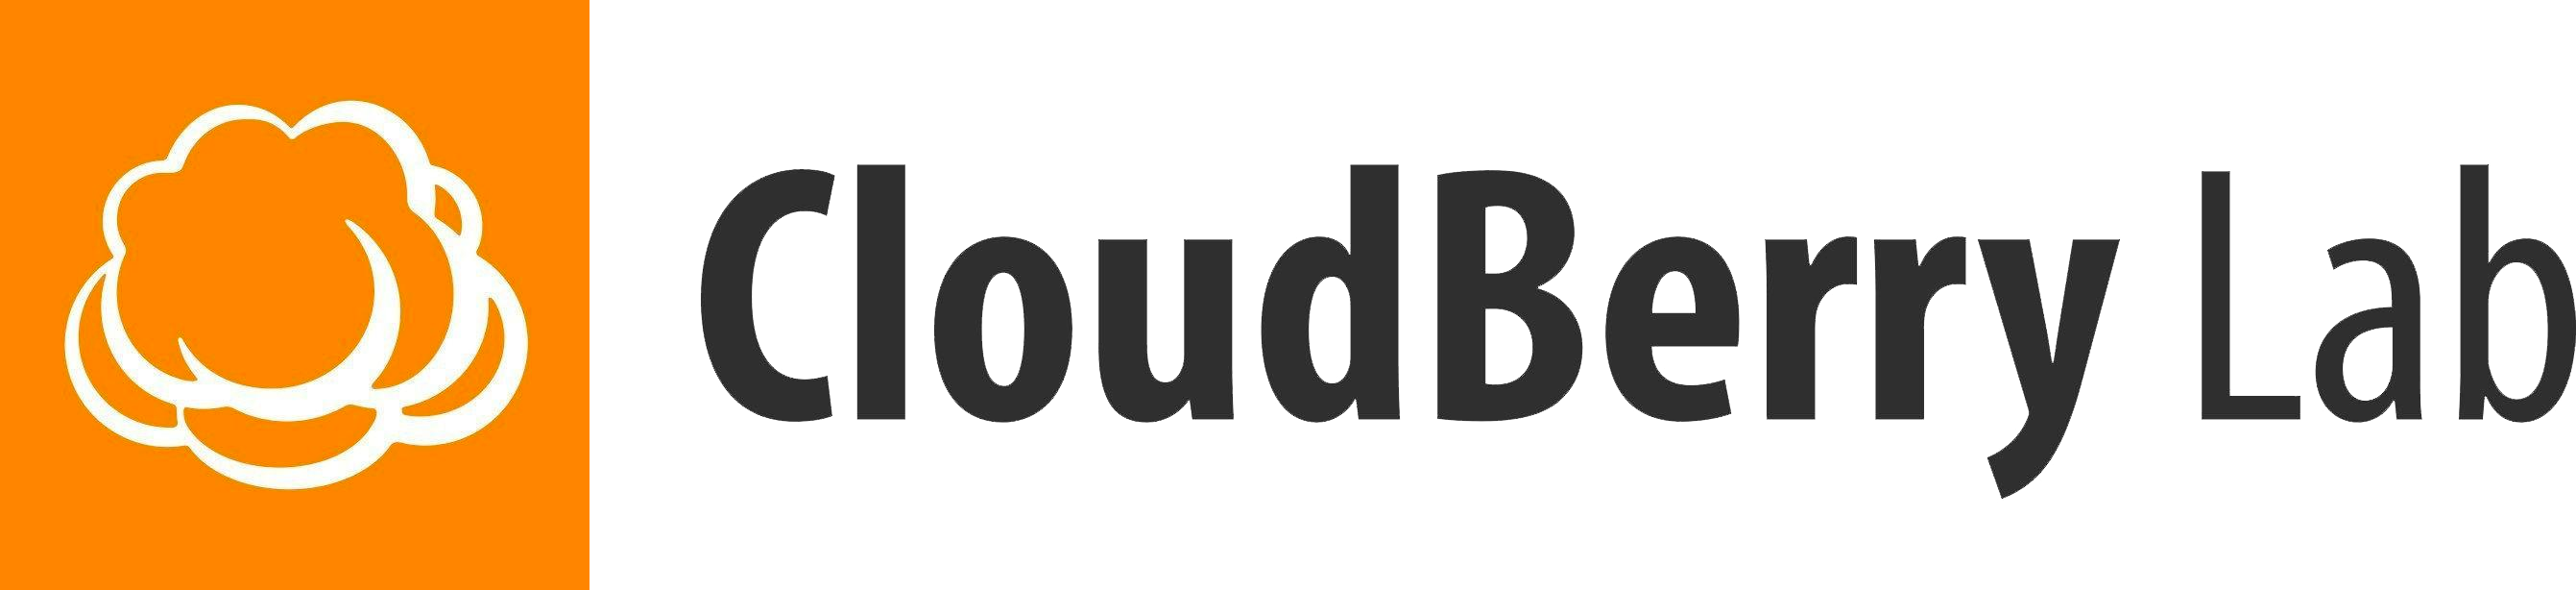 CloudBerry Lab Logo